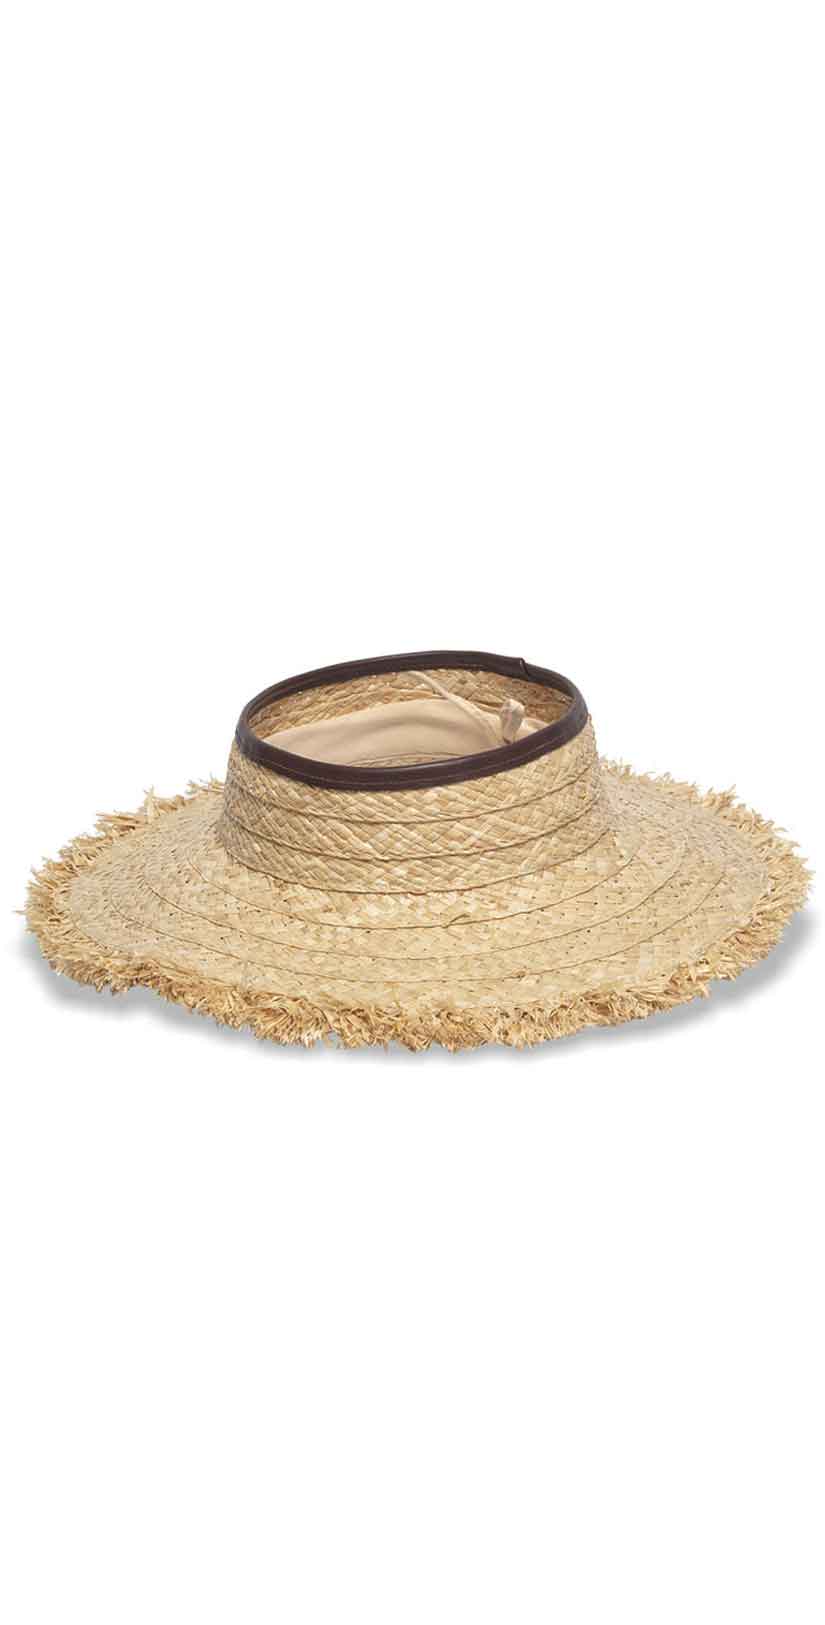 Nikki Beach Porto Heli Hat in Natural/Brown: